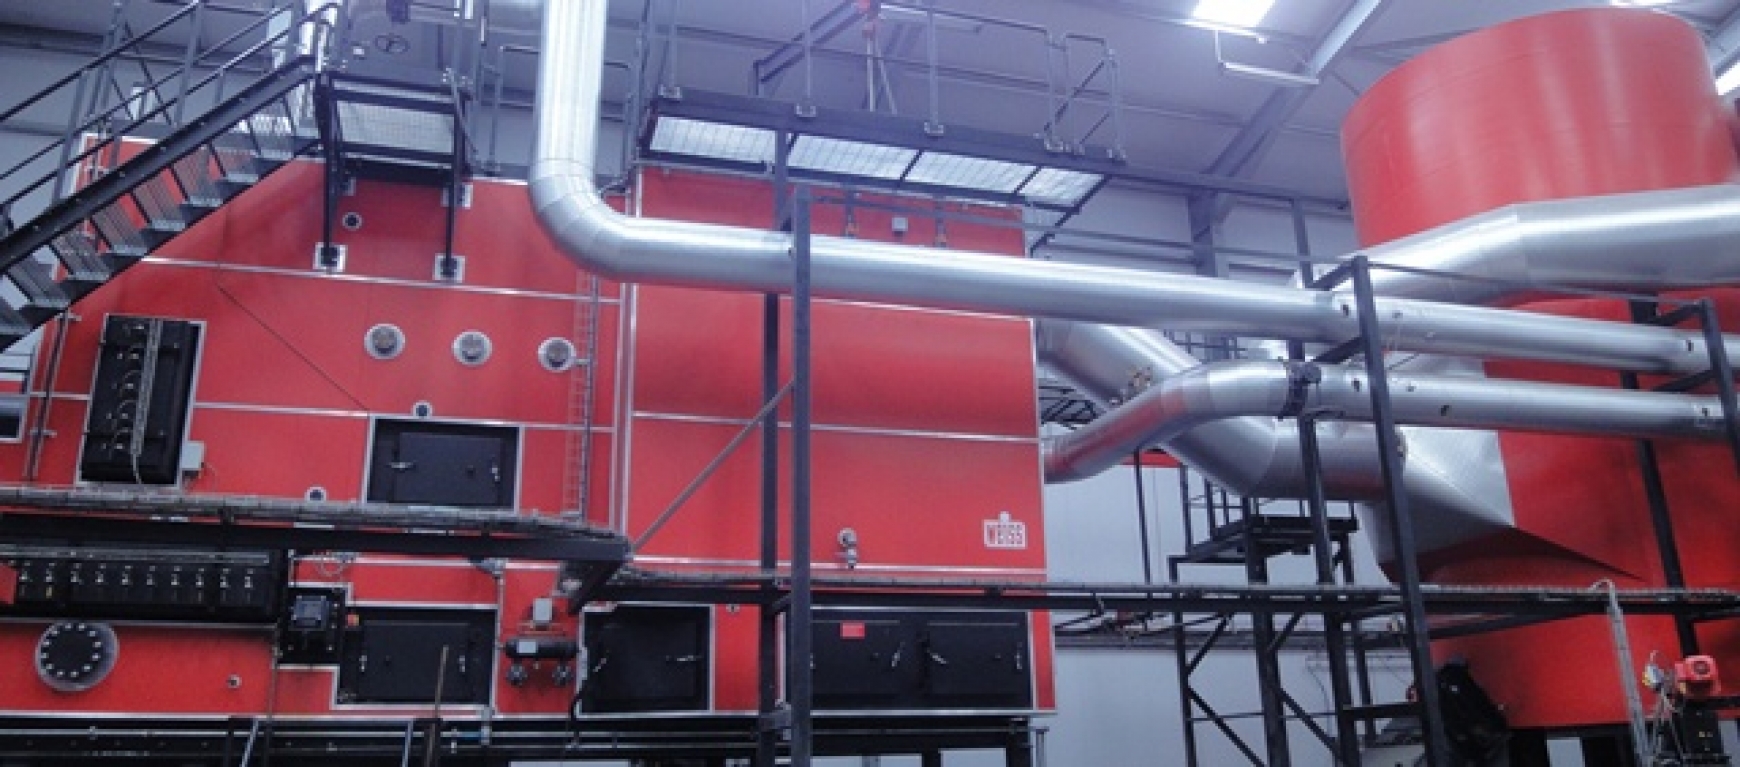 Large red biomass boiler